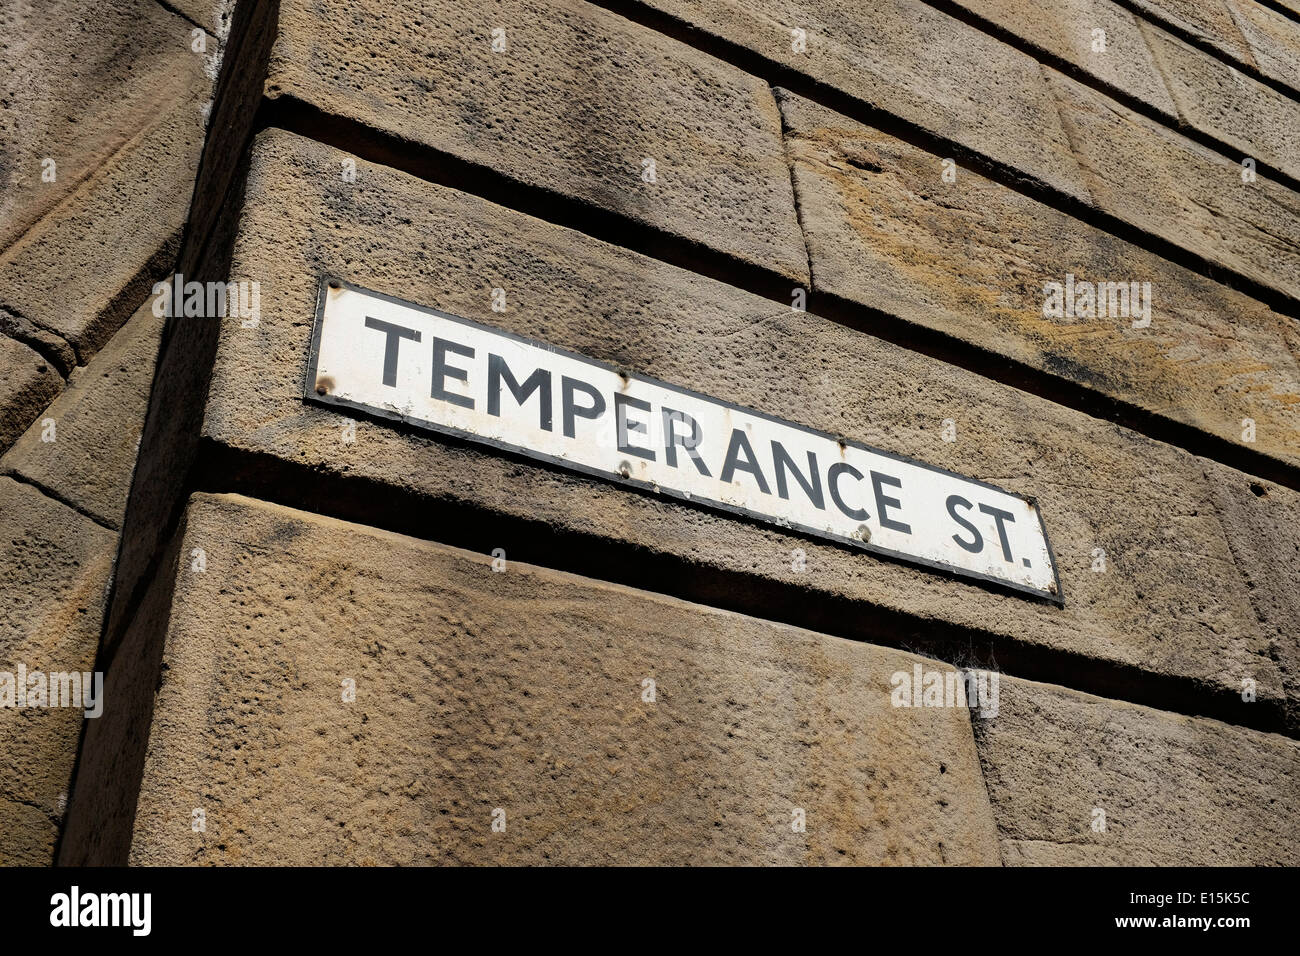 Temperance Street sign in Manchester UK Banque D'Images